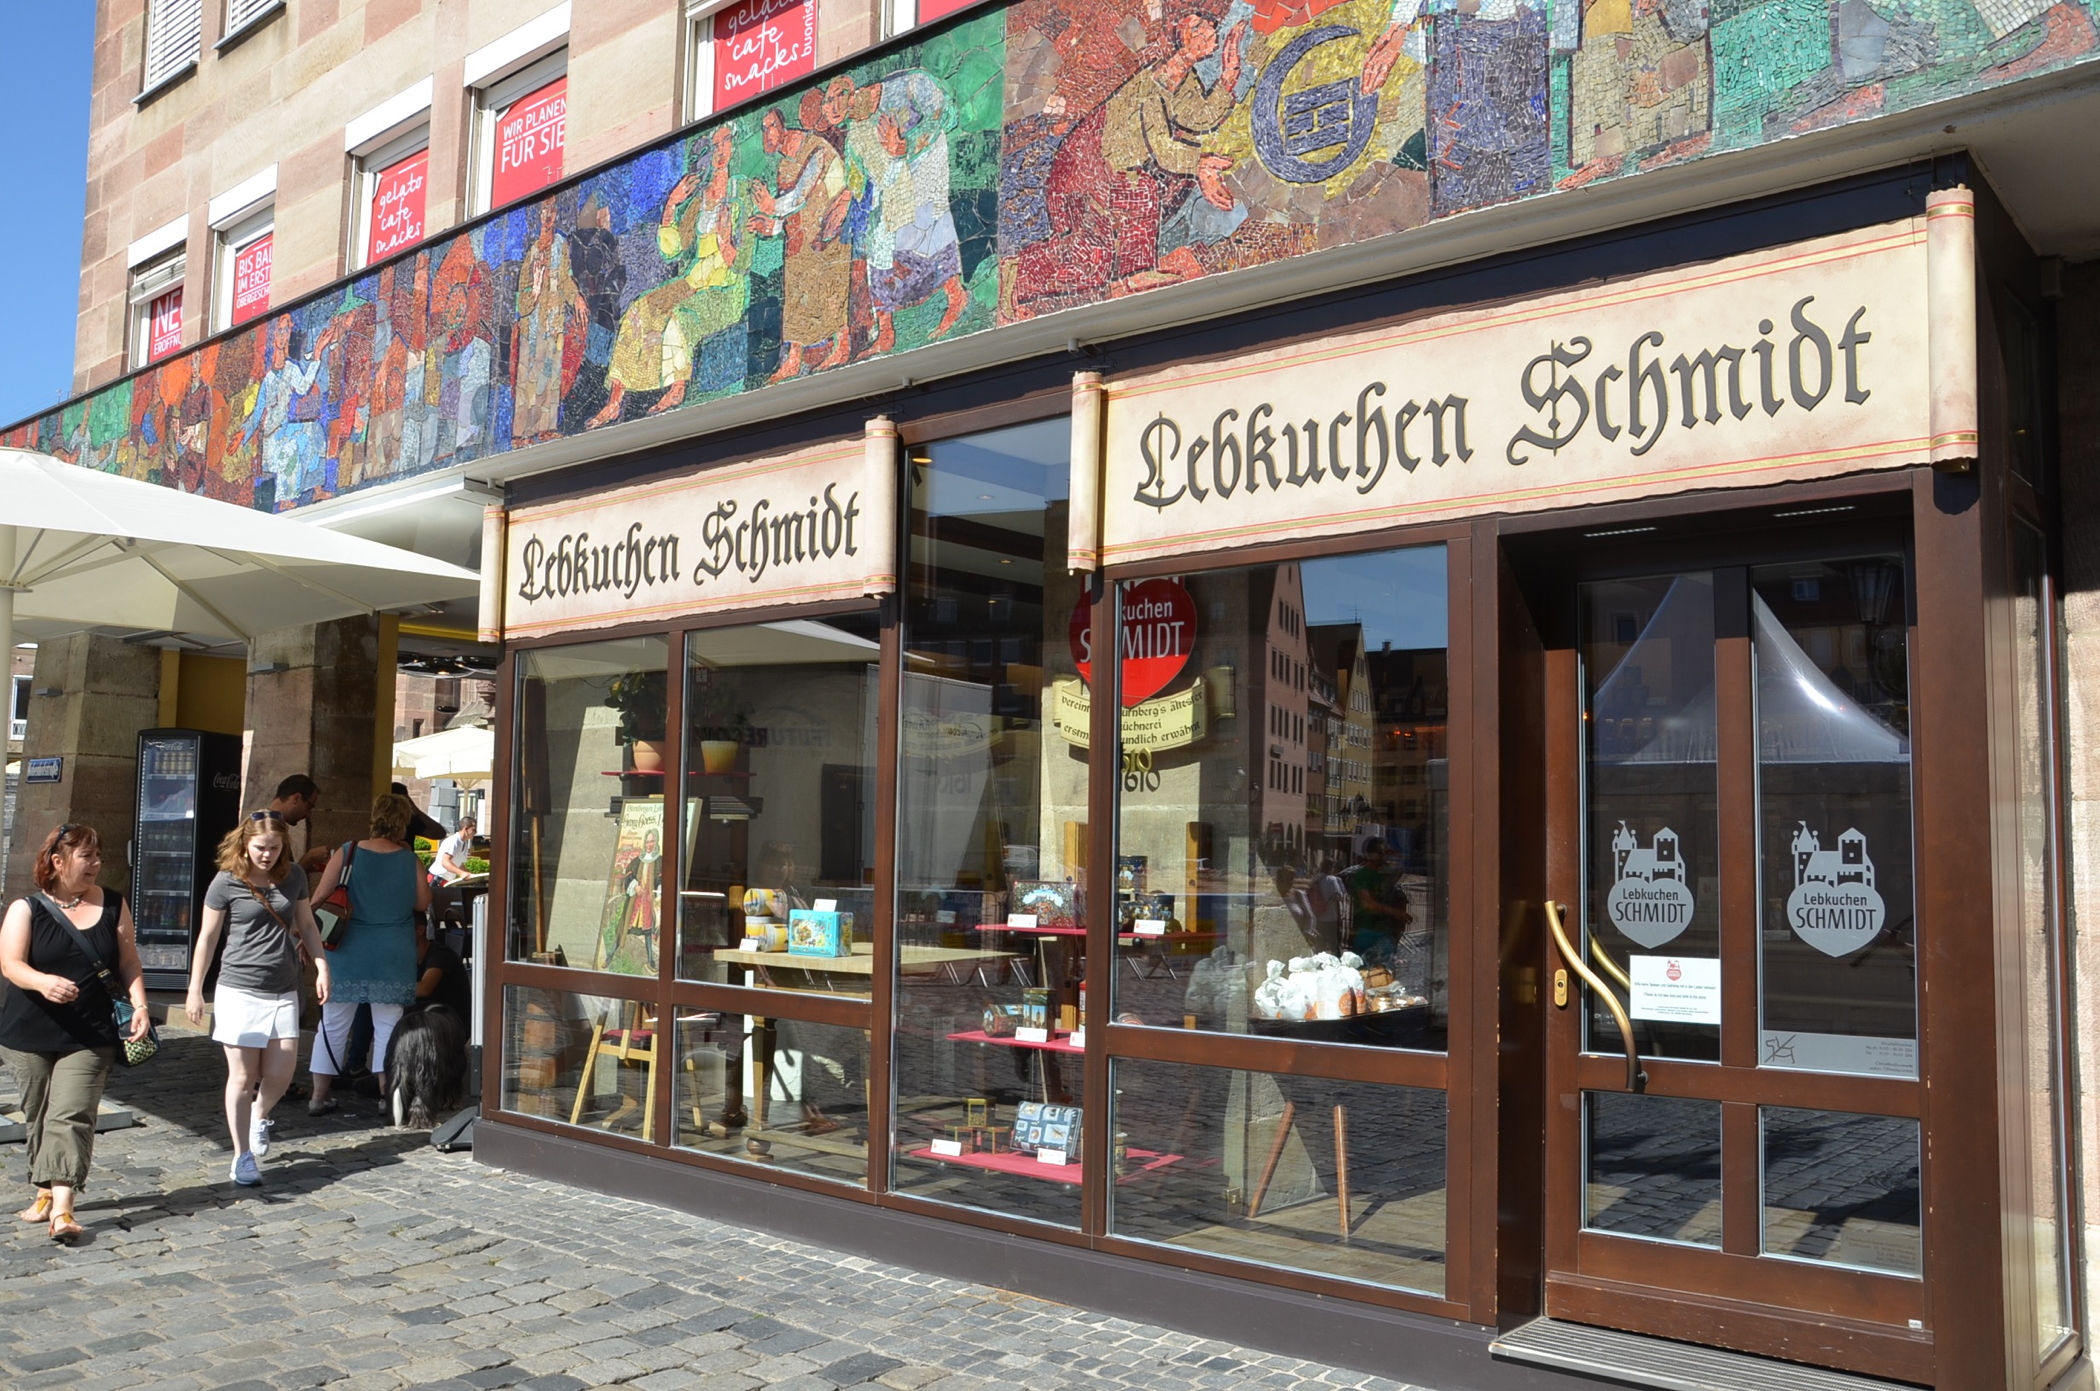 Find the best Nuremberg sausage and gingerbread in the best nuremberg restaurants and Lebkuchen Schmidt